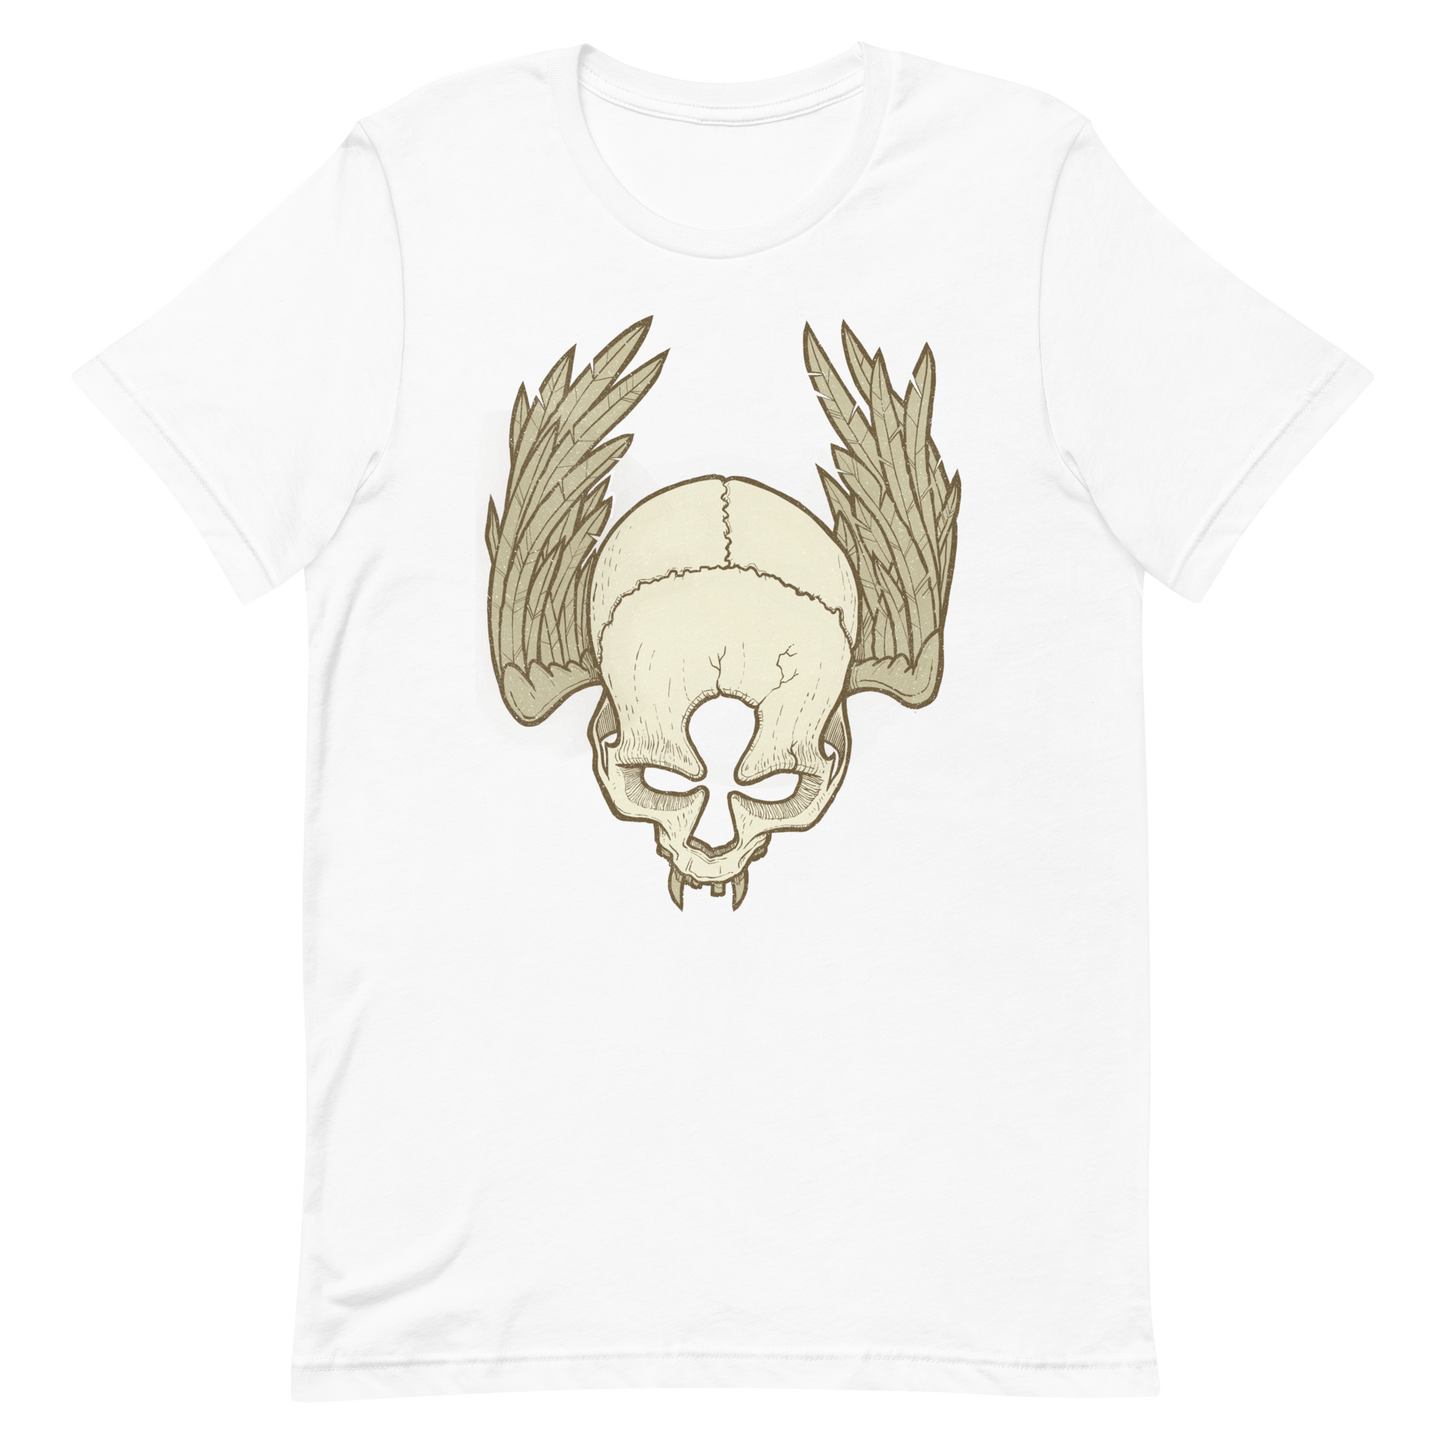 Guardian angel motorcycle t-shirt